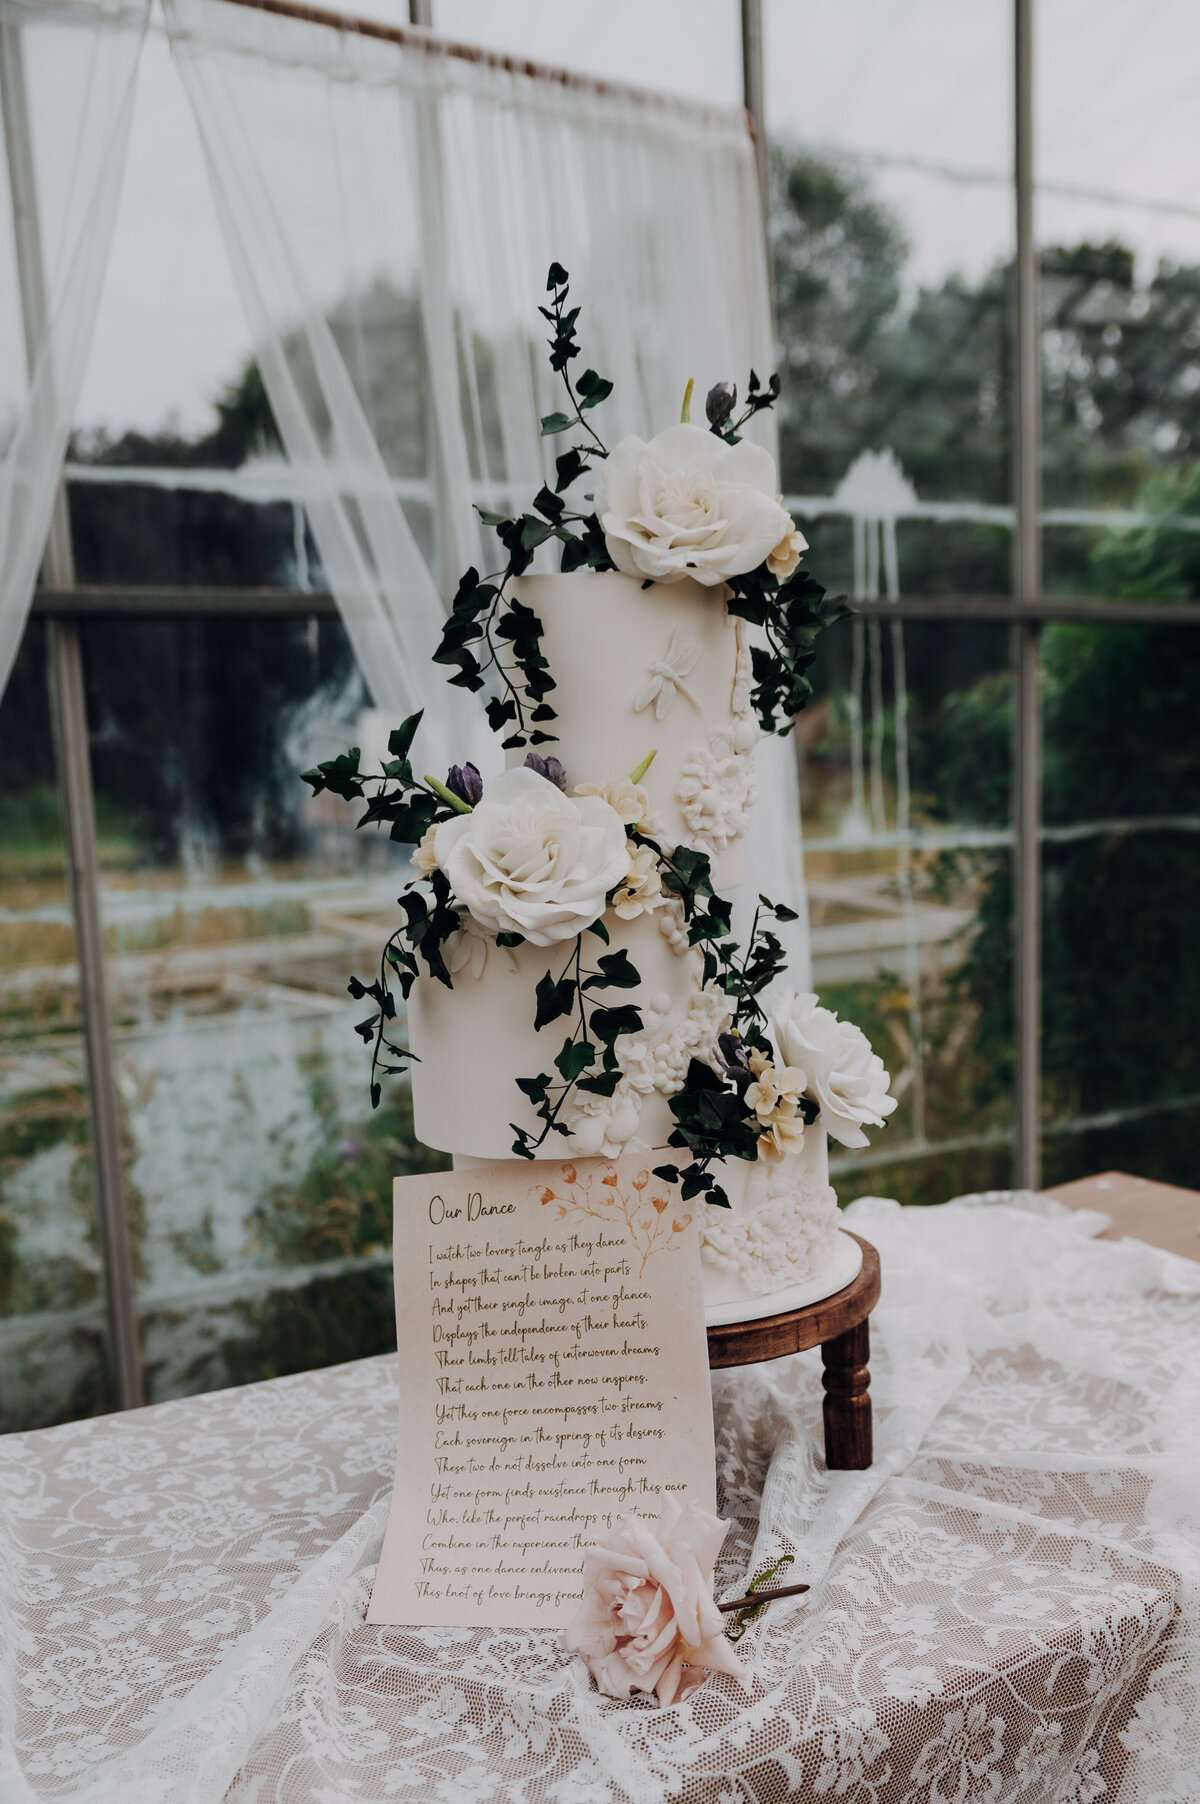 Luxury nature inspired wedding cake designer vanilla Spice Cake Studio Northamptonshire 3 tier floral design